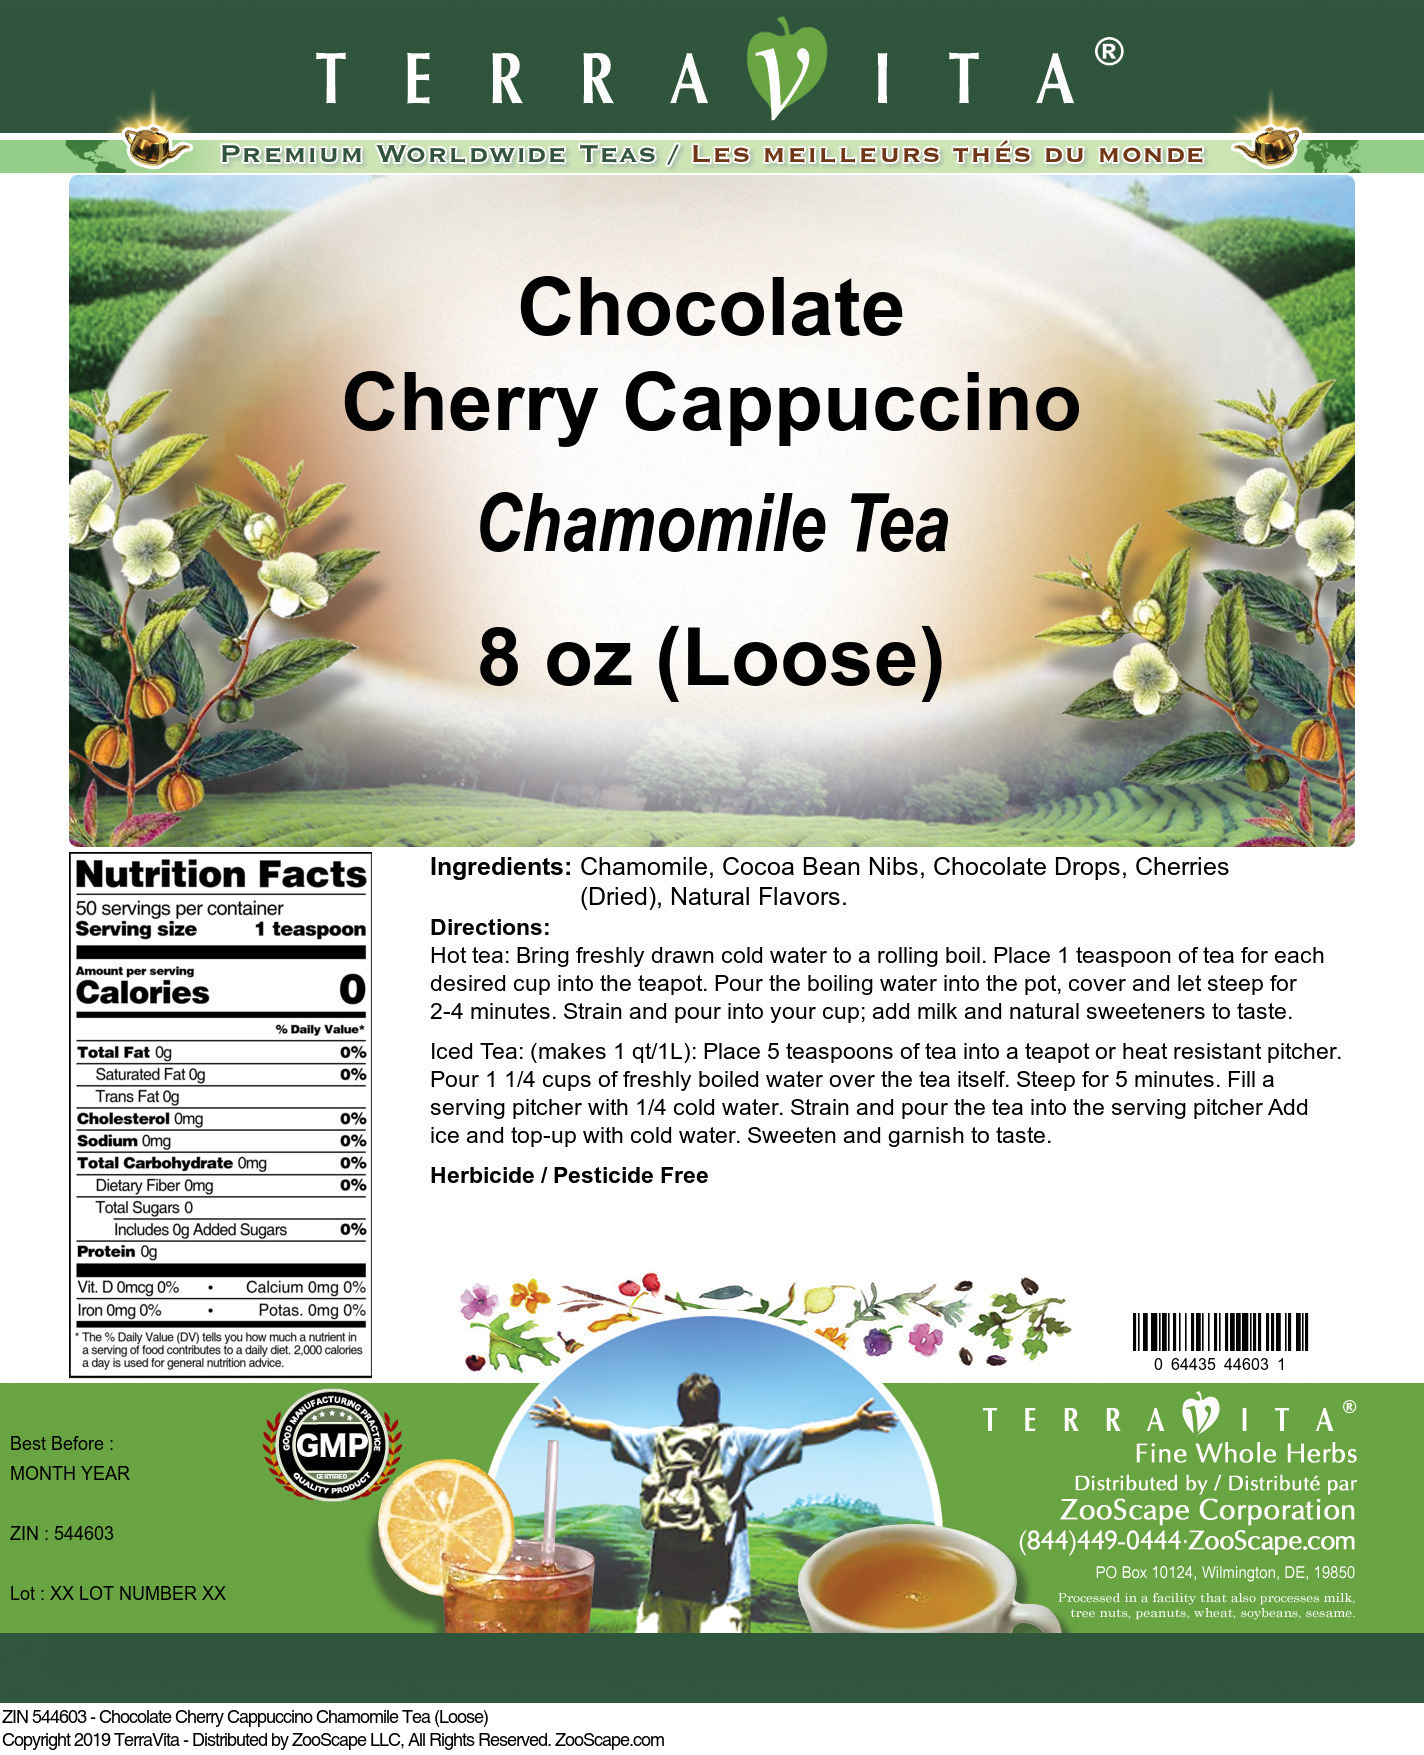 Chocolate Cherry Cappuccino Chamomile Tea (Loose) - Label